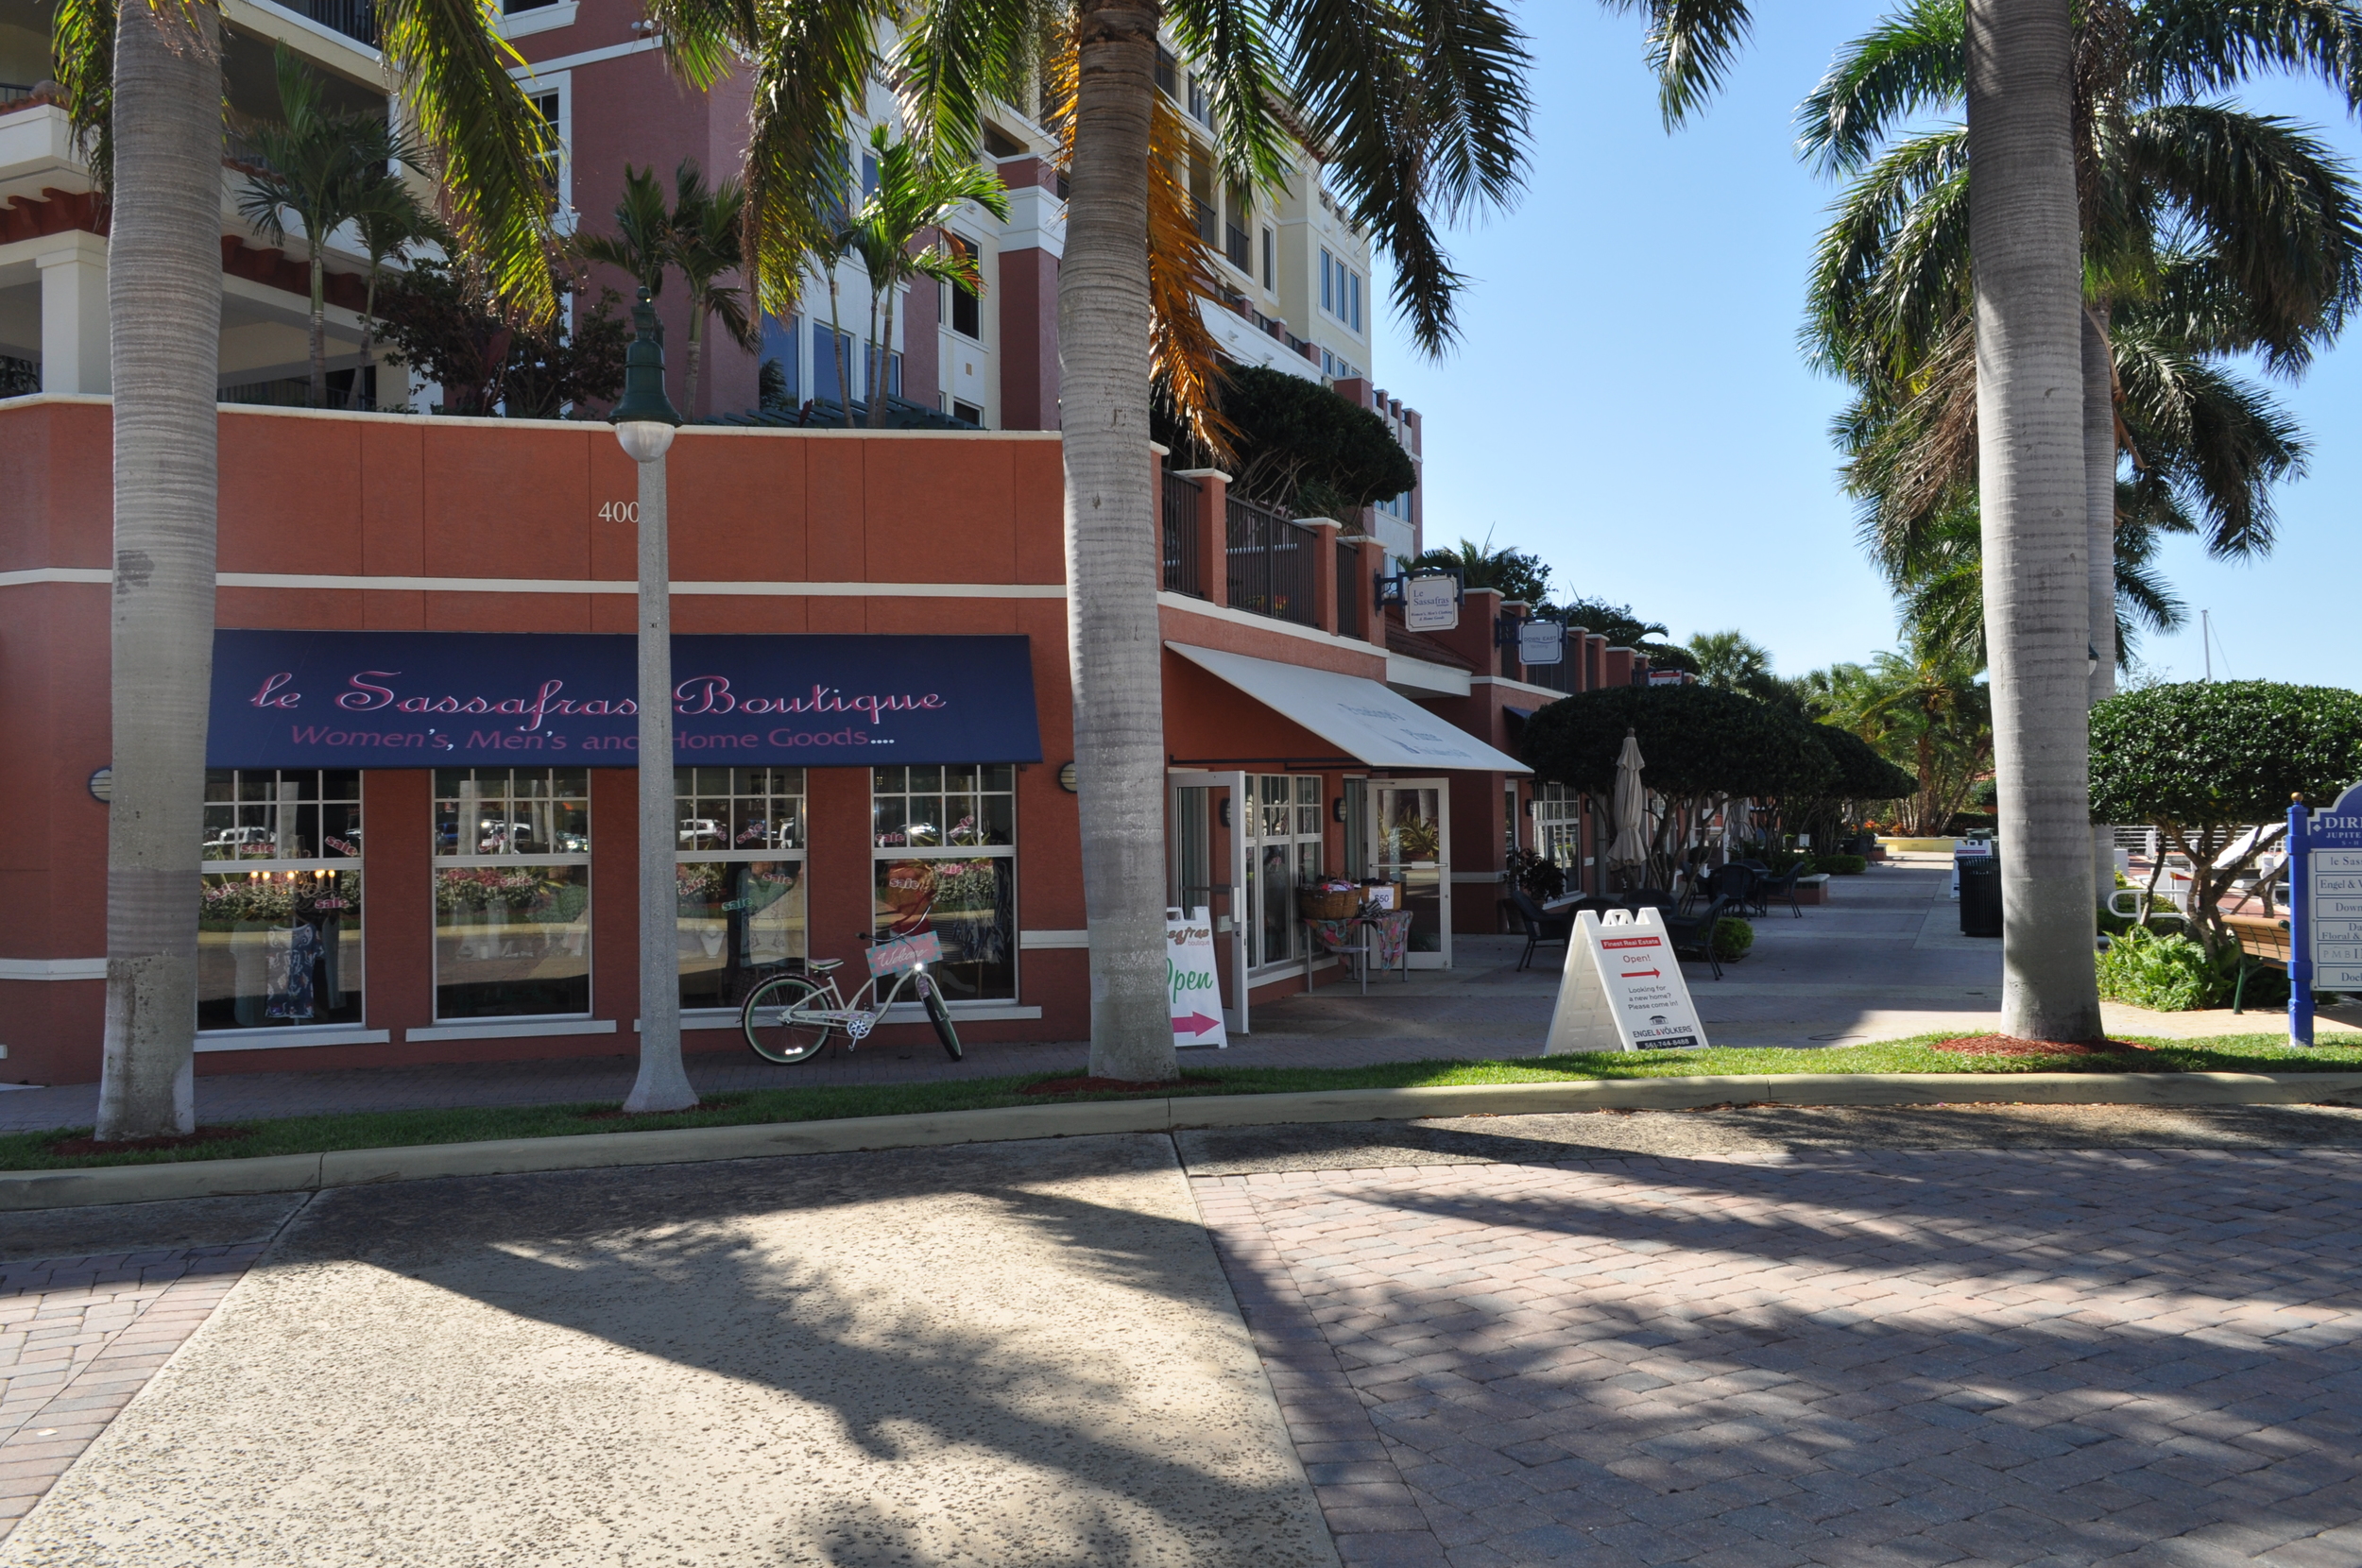 Jupiter Yacht Club Florida Retail Shops.JPG